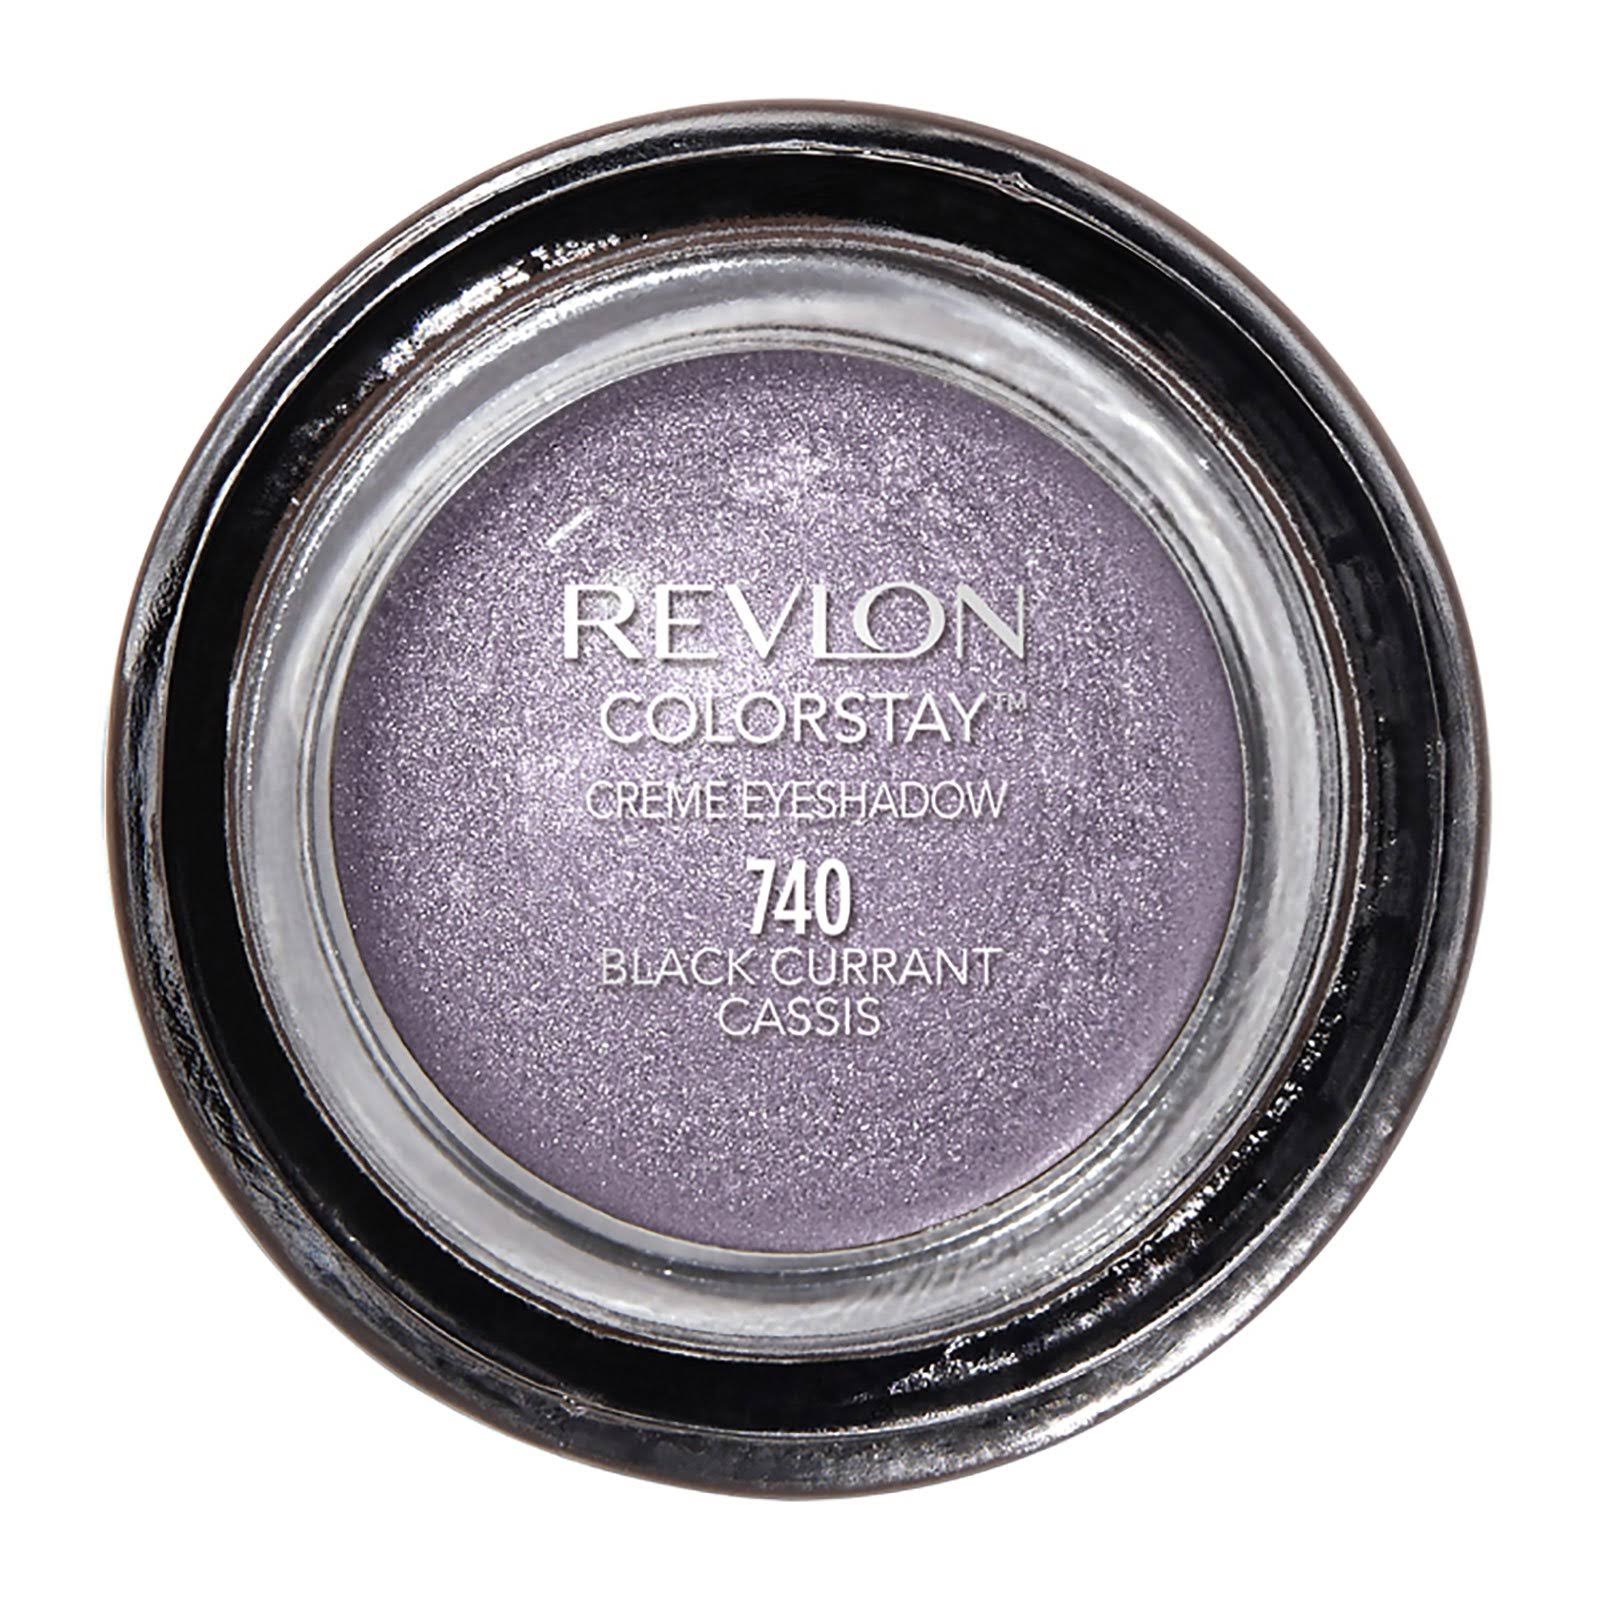 Revlon Colorstay Creme Eye Shadow - 740 Black Currant